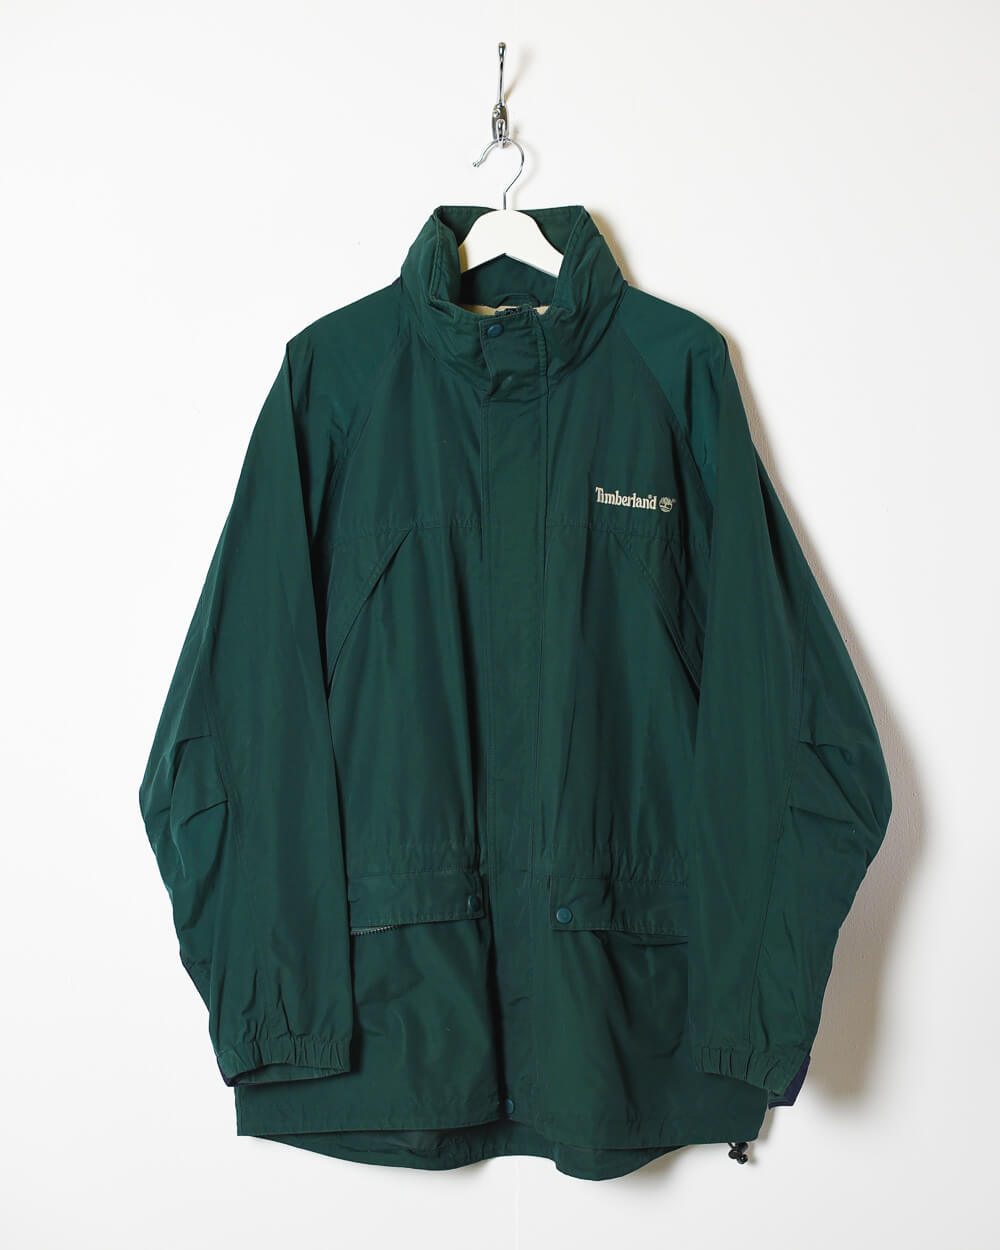 Vintage 90s Cotton Mix Plain Green Timberland Weather Gear Jacket 